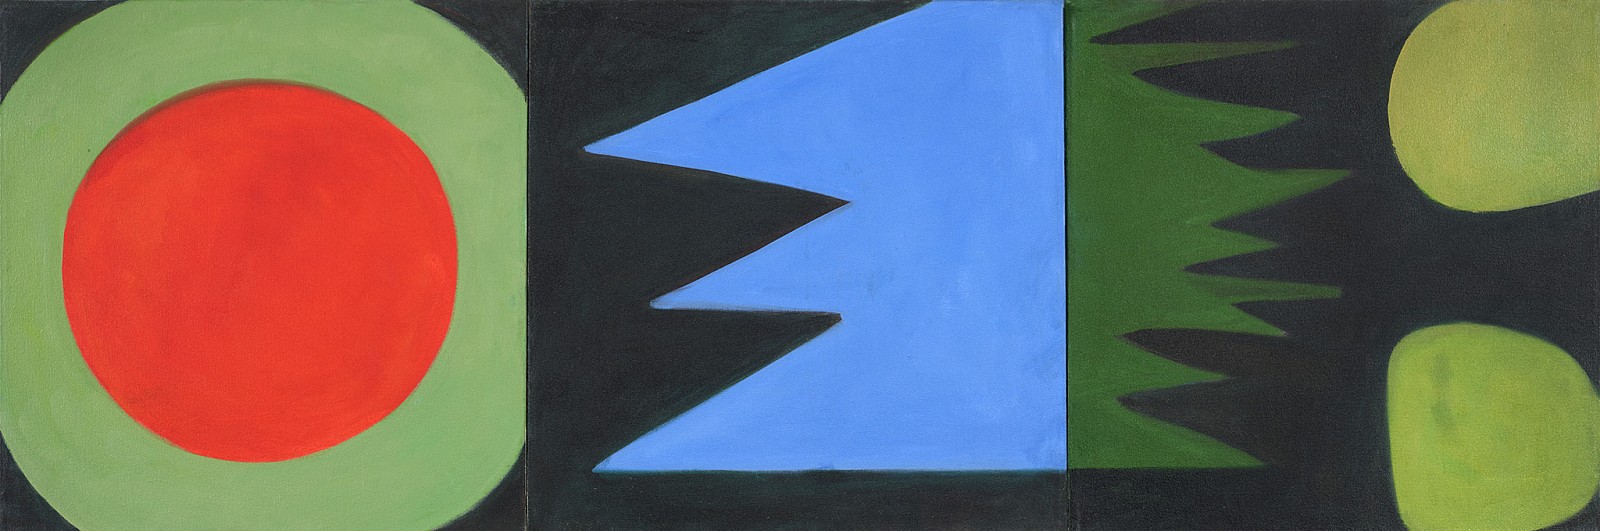 Jean Cohen, Bayou, 1987
Oil on canvas, 20 1/4 x 60 3/4 in. (51.4 x 154.3 cm)
JCOH-00004